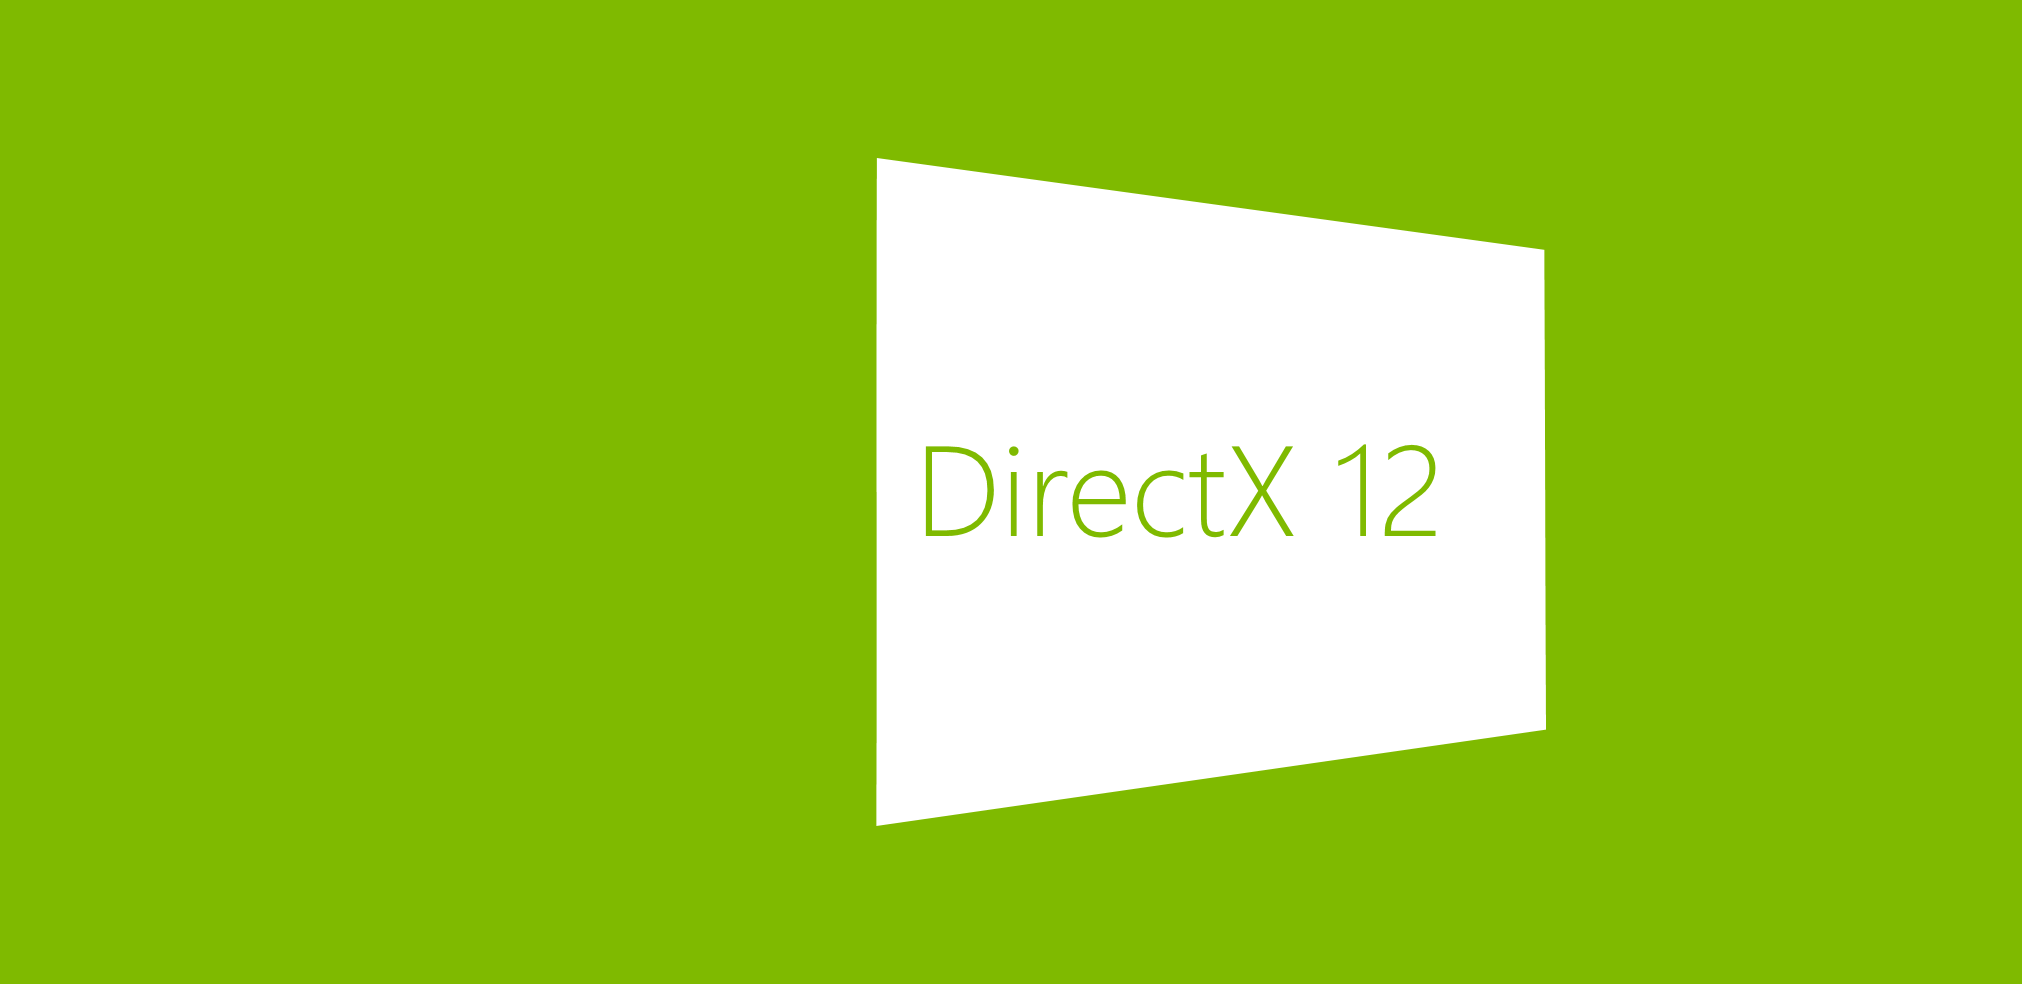 Directx offline. DIRECTX значок. Директ Икс 12. Microsoft DIRECTX. DIRECTX 12 логотип.